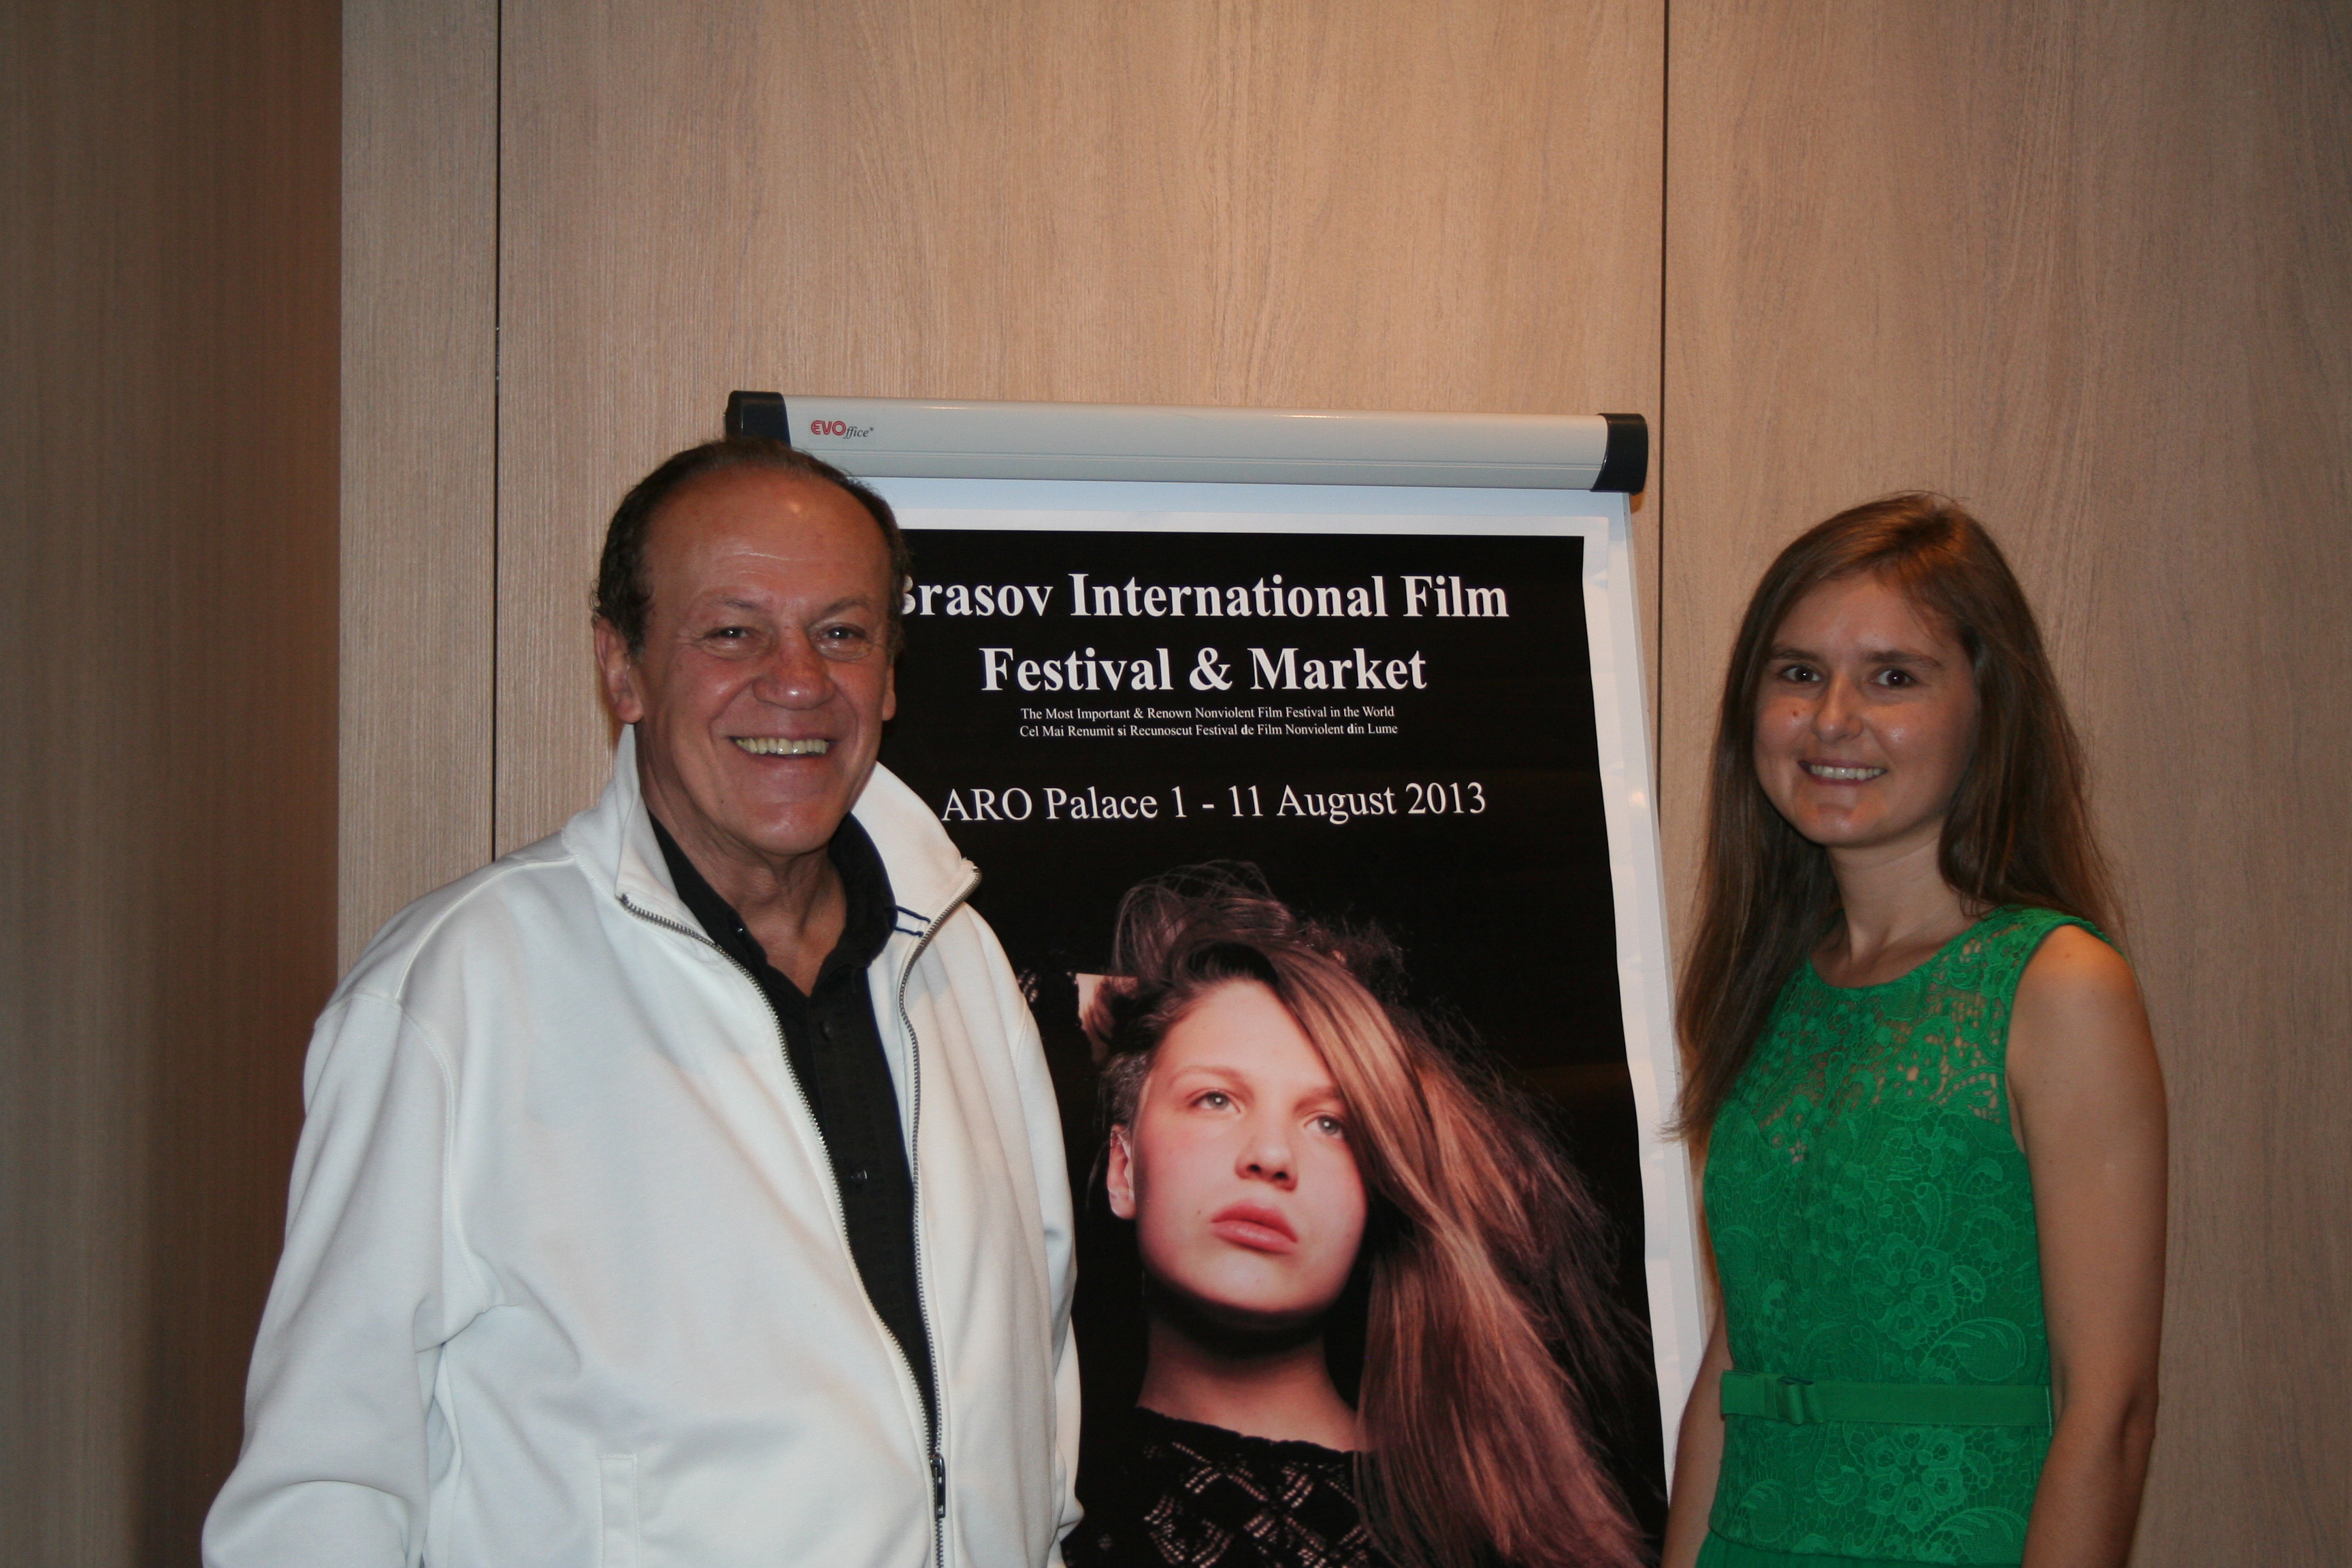 Bruno Pischiutta and Producer Daria Trifu at the 2013 press conference of the Brasov International Film Festival & Market (www.brasovfilmfestival.com)